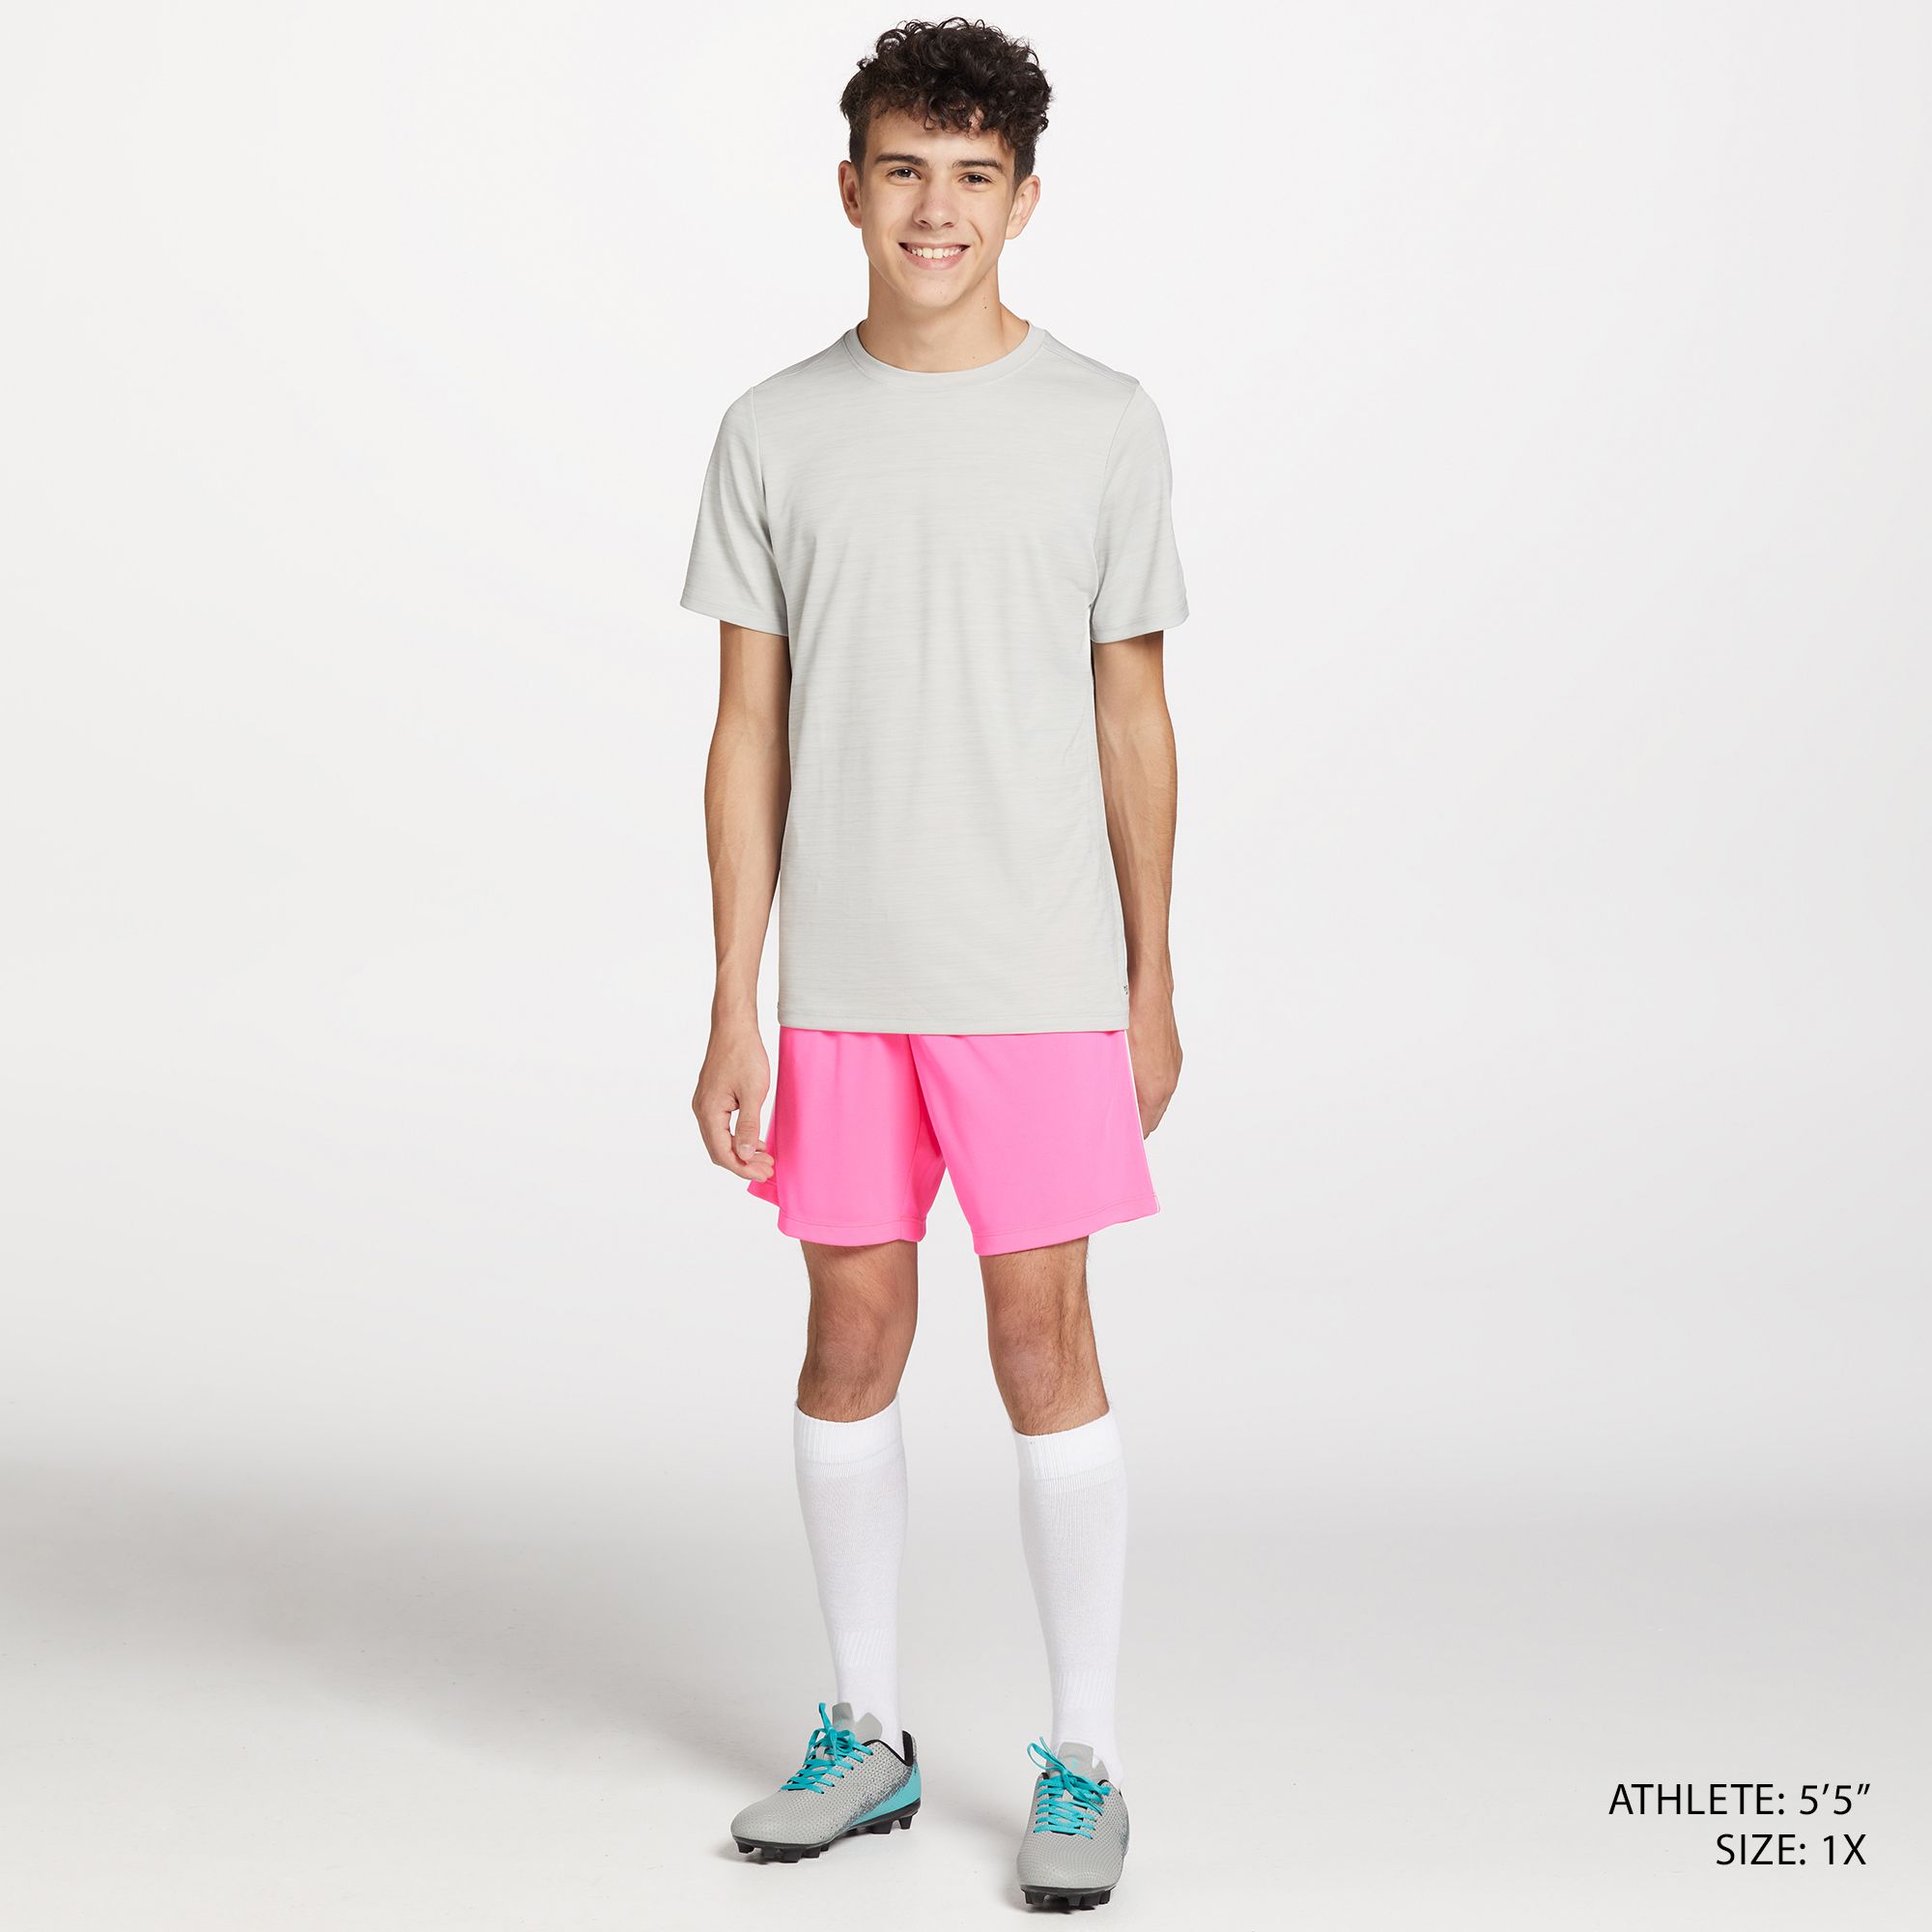 DSG Boys' Knit Soccer Shorts